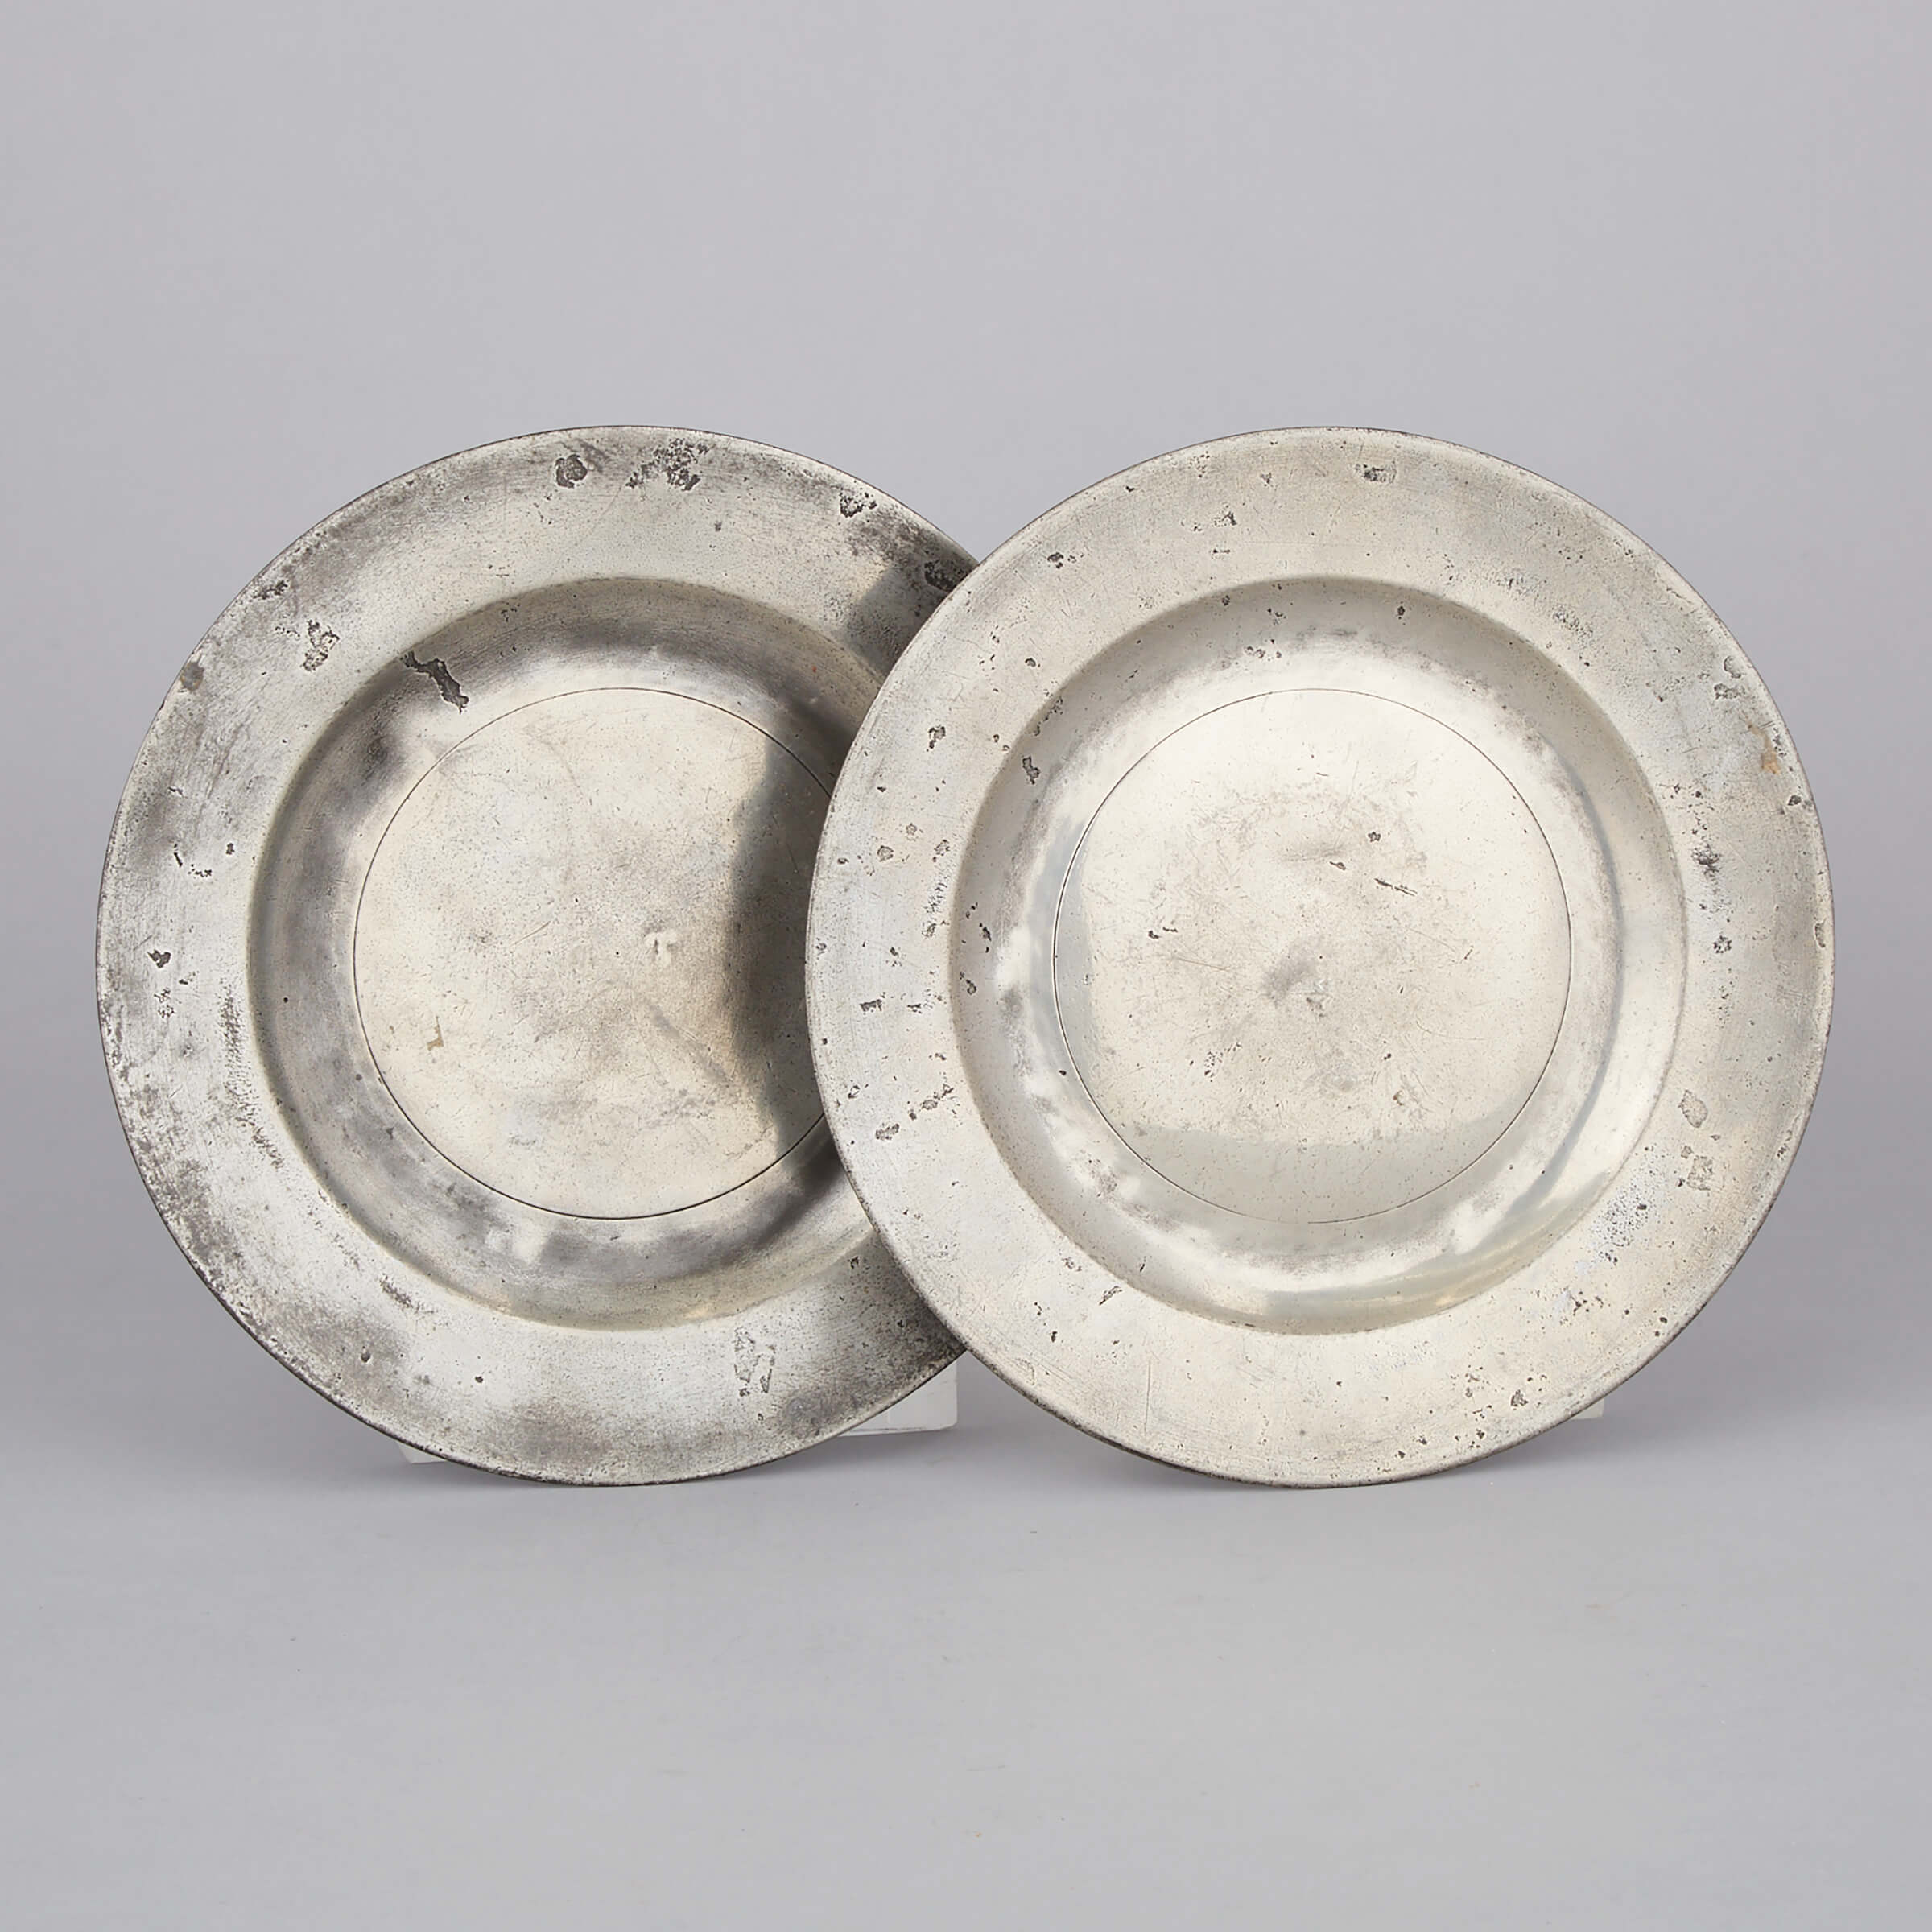 Pair of Irish Pewter Plates, James Nolan, Dublin, late 18th century